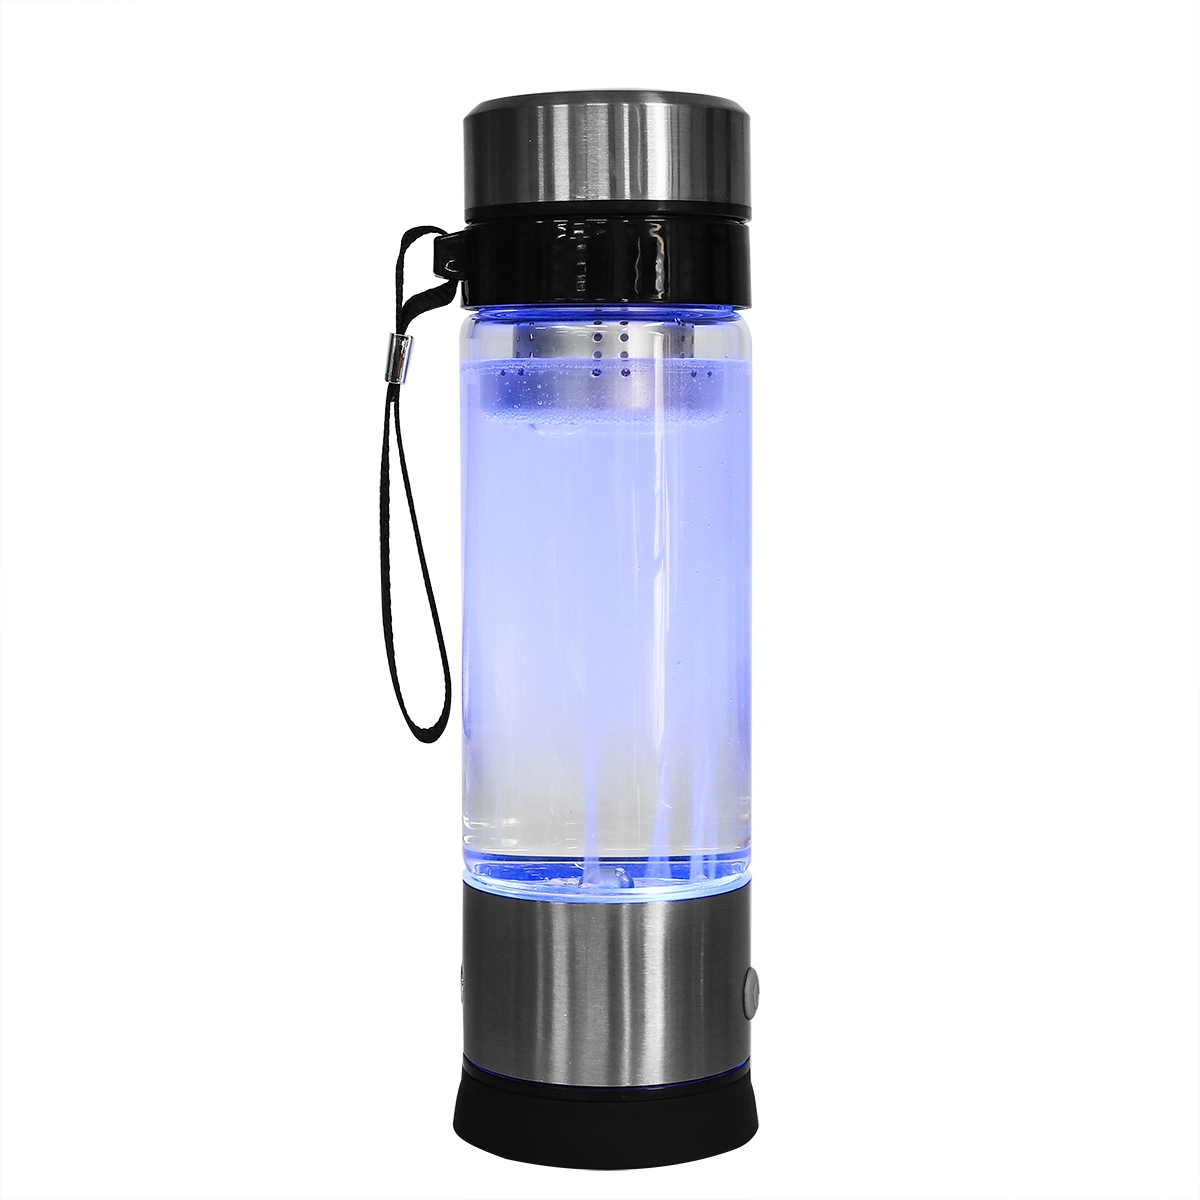 500ML Portable Hydrogen Water Generator Cup Water Filter Ionizer Maker/Generator Super Antioxidants Hydrogen Alkaline Bottle